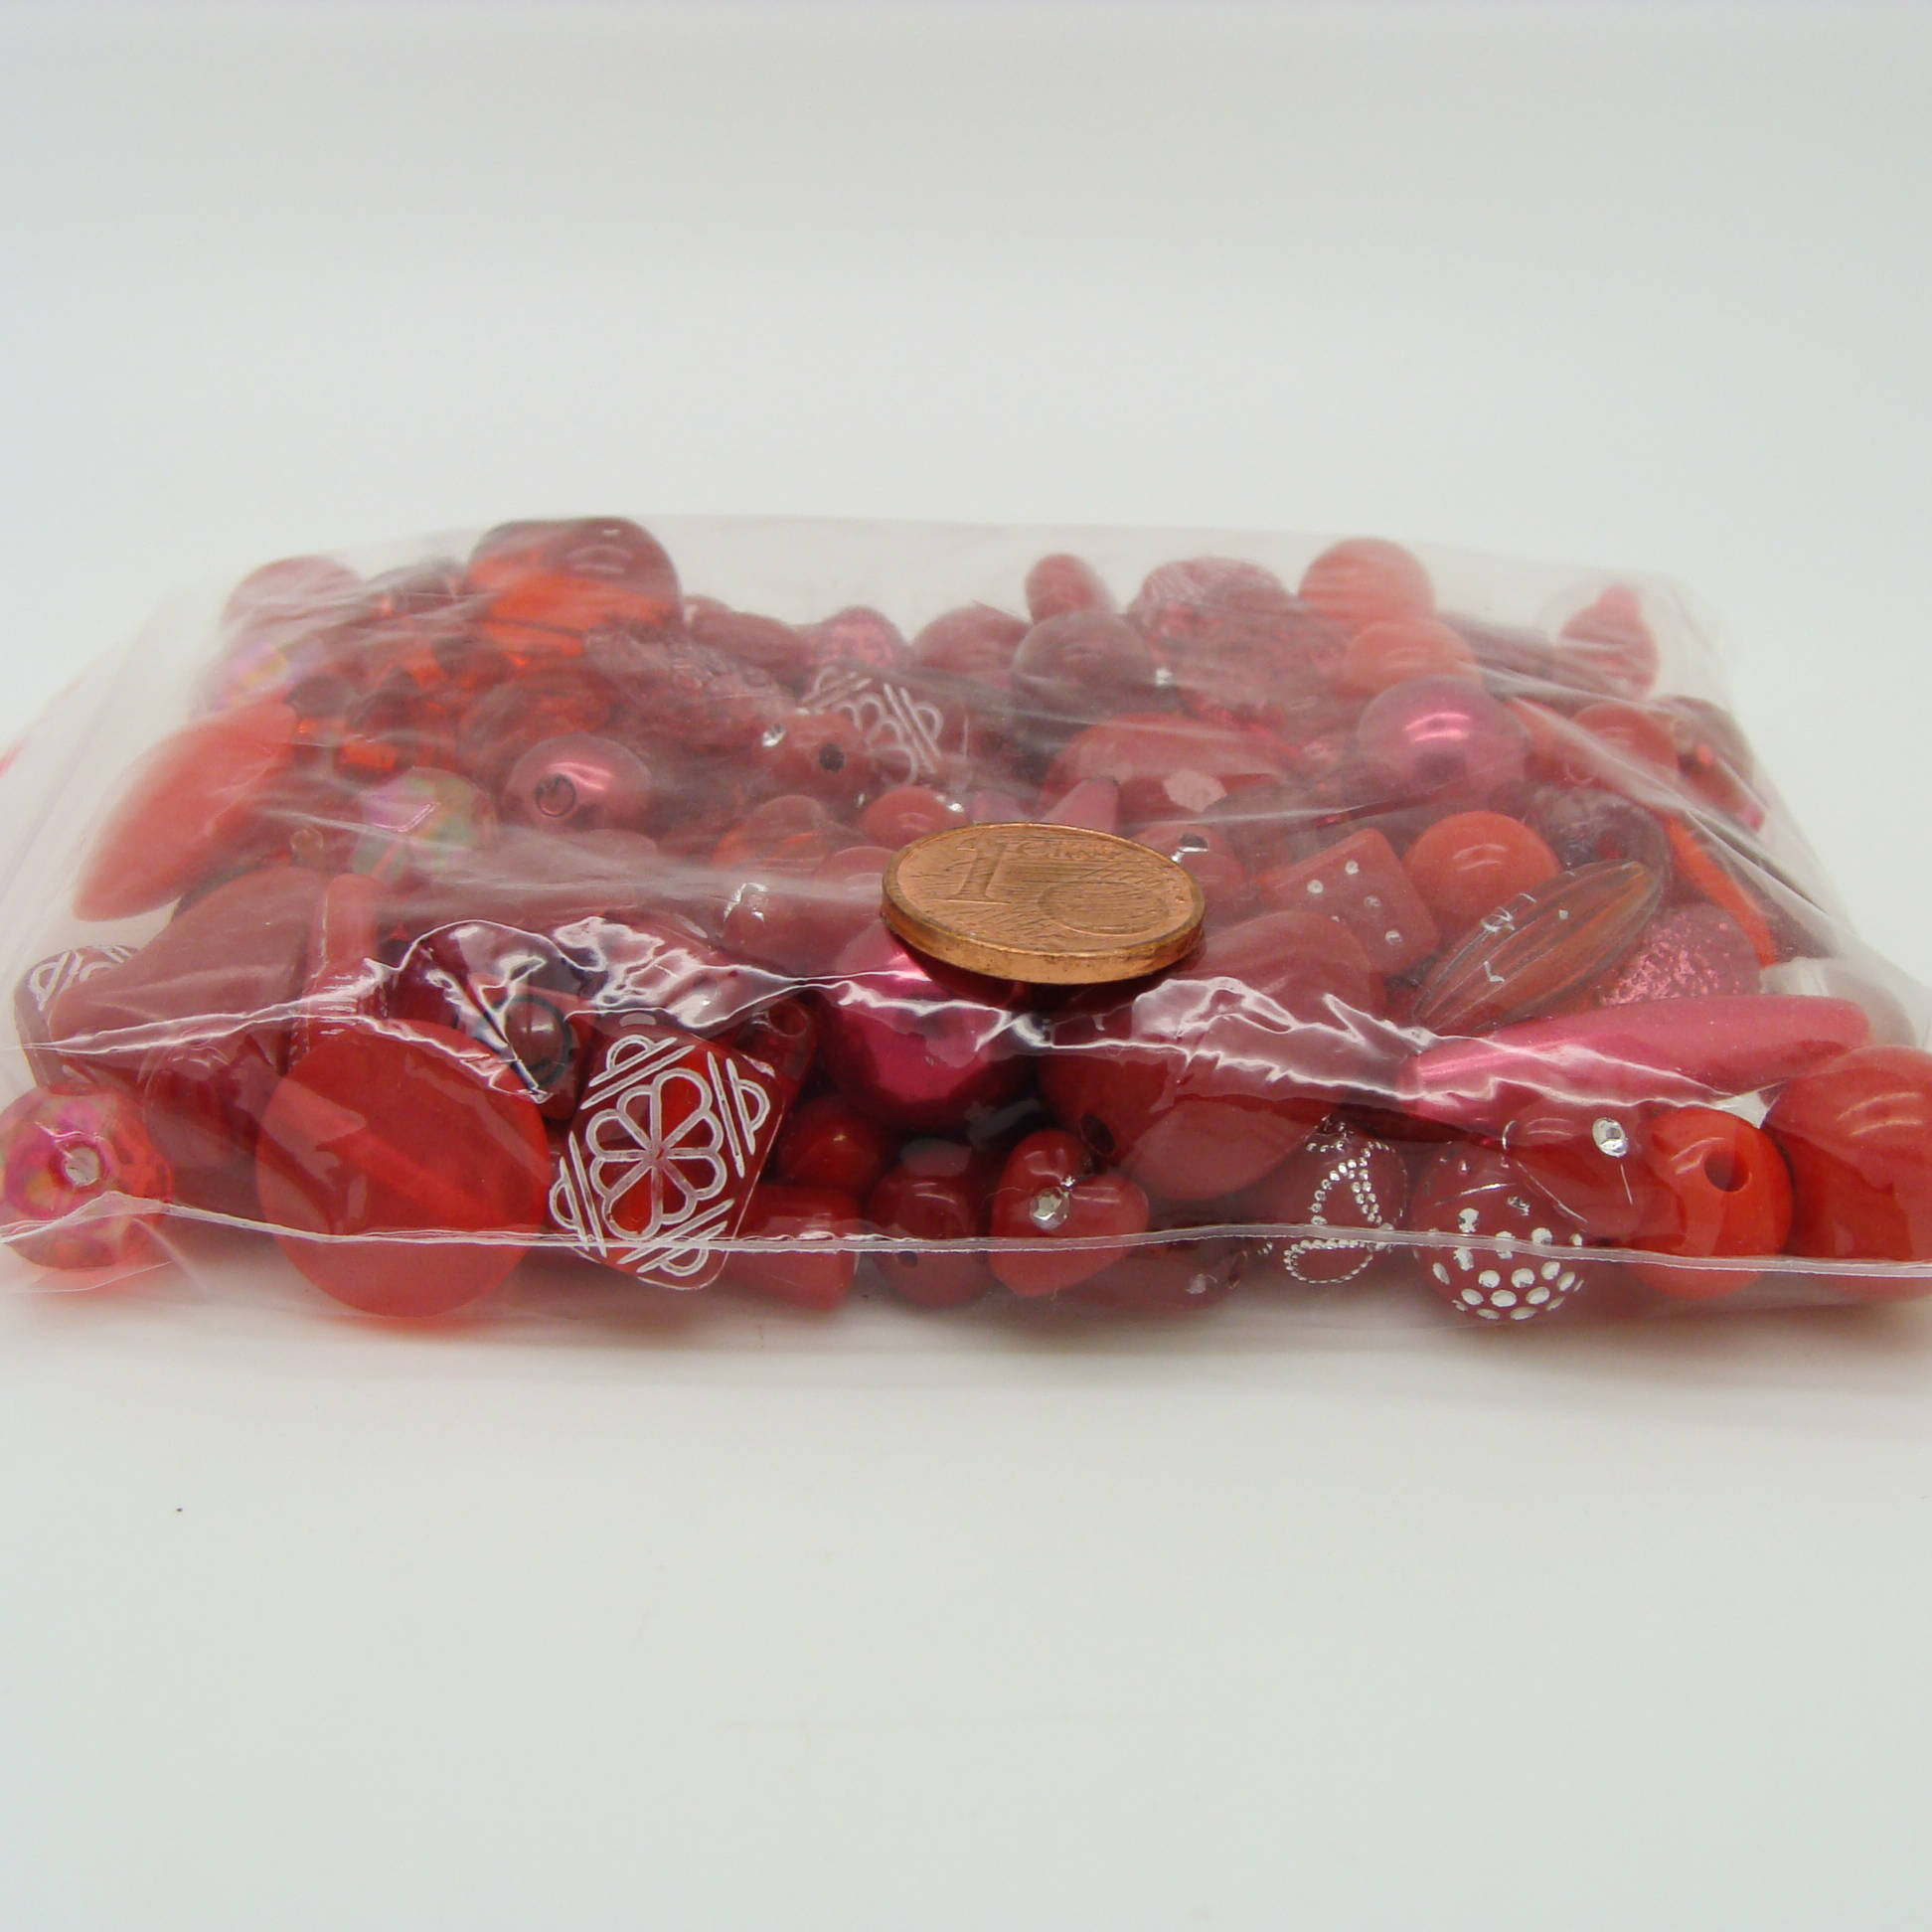 acry-75g-rouge perle rouge acrylique carre